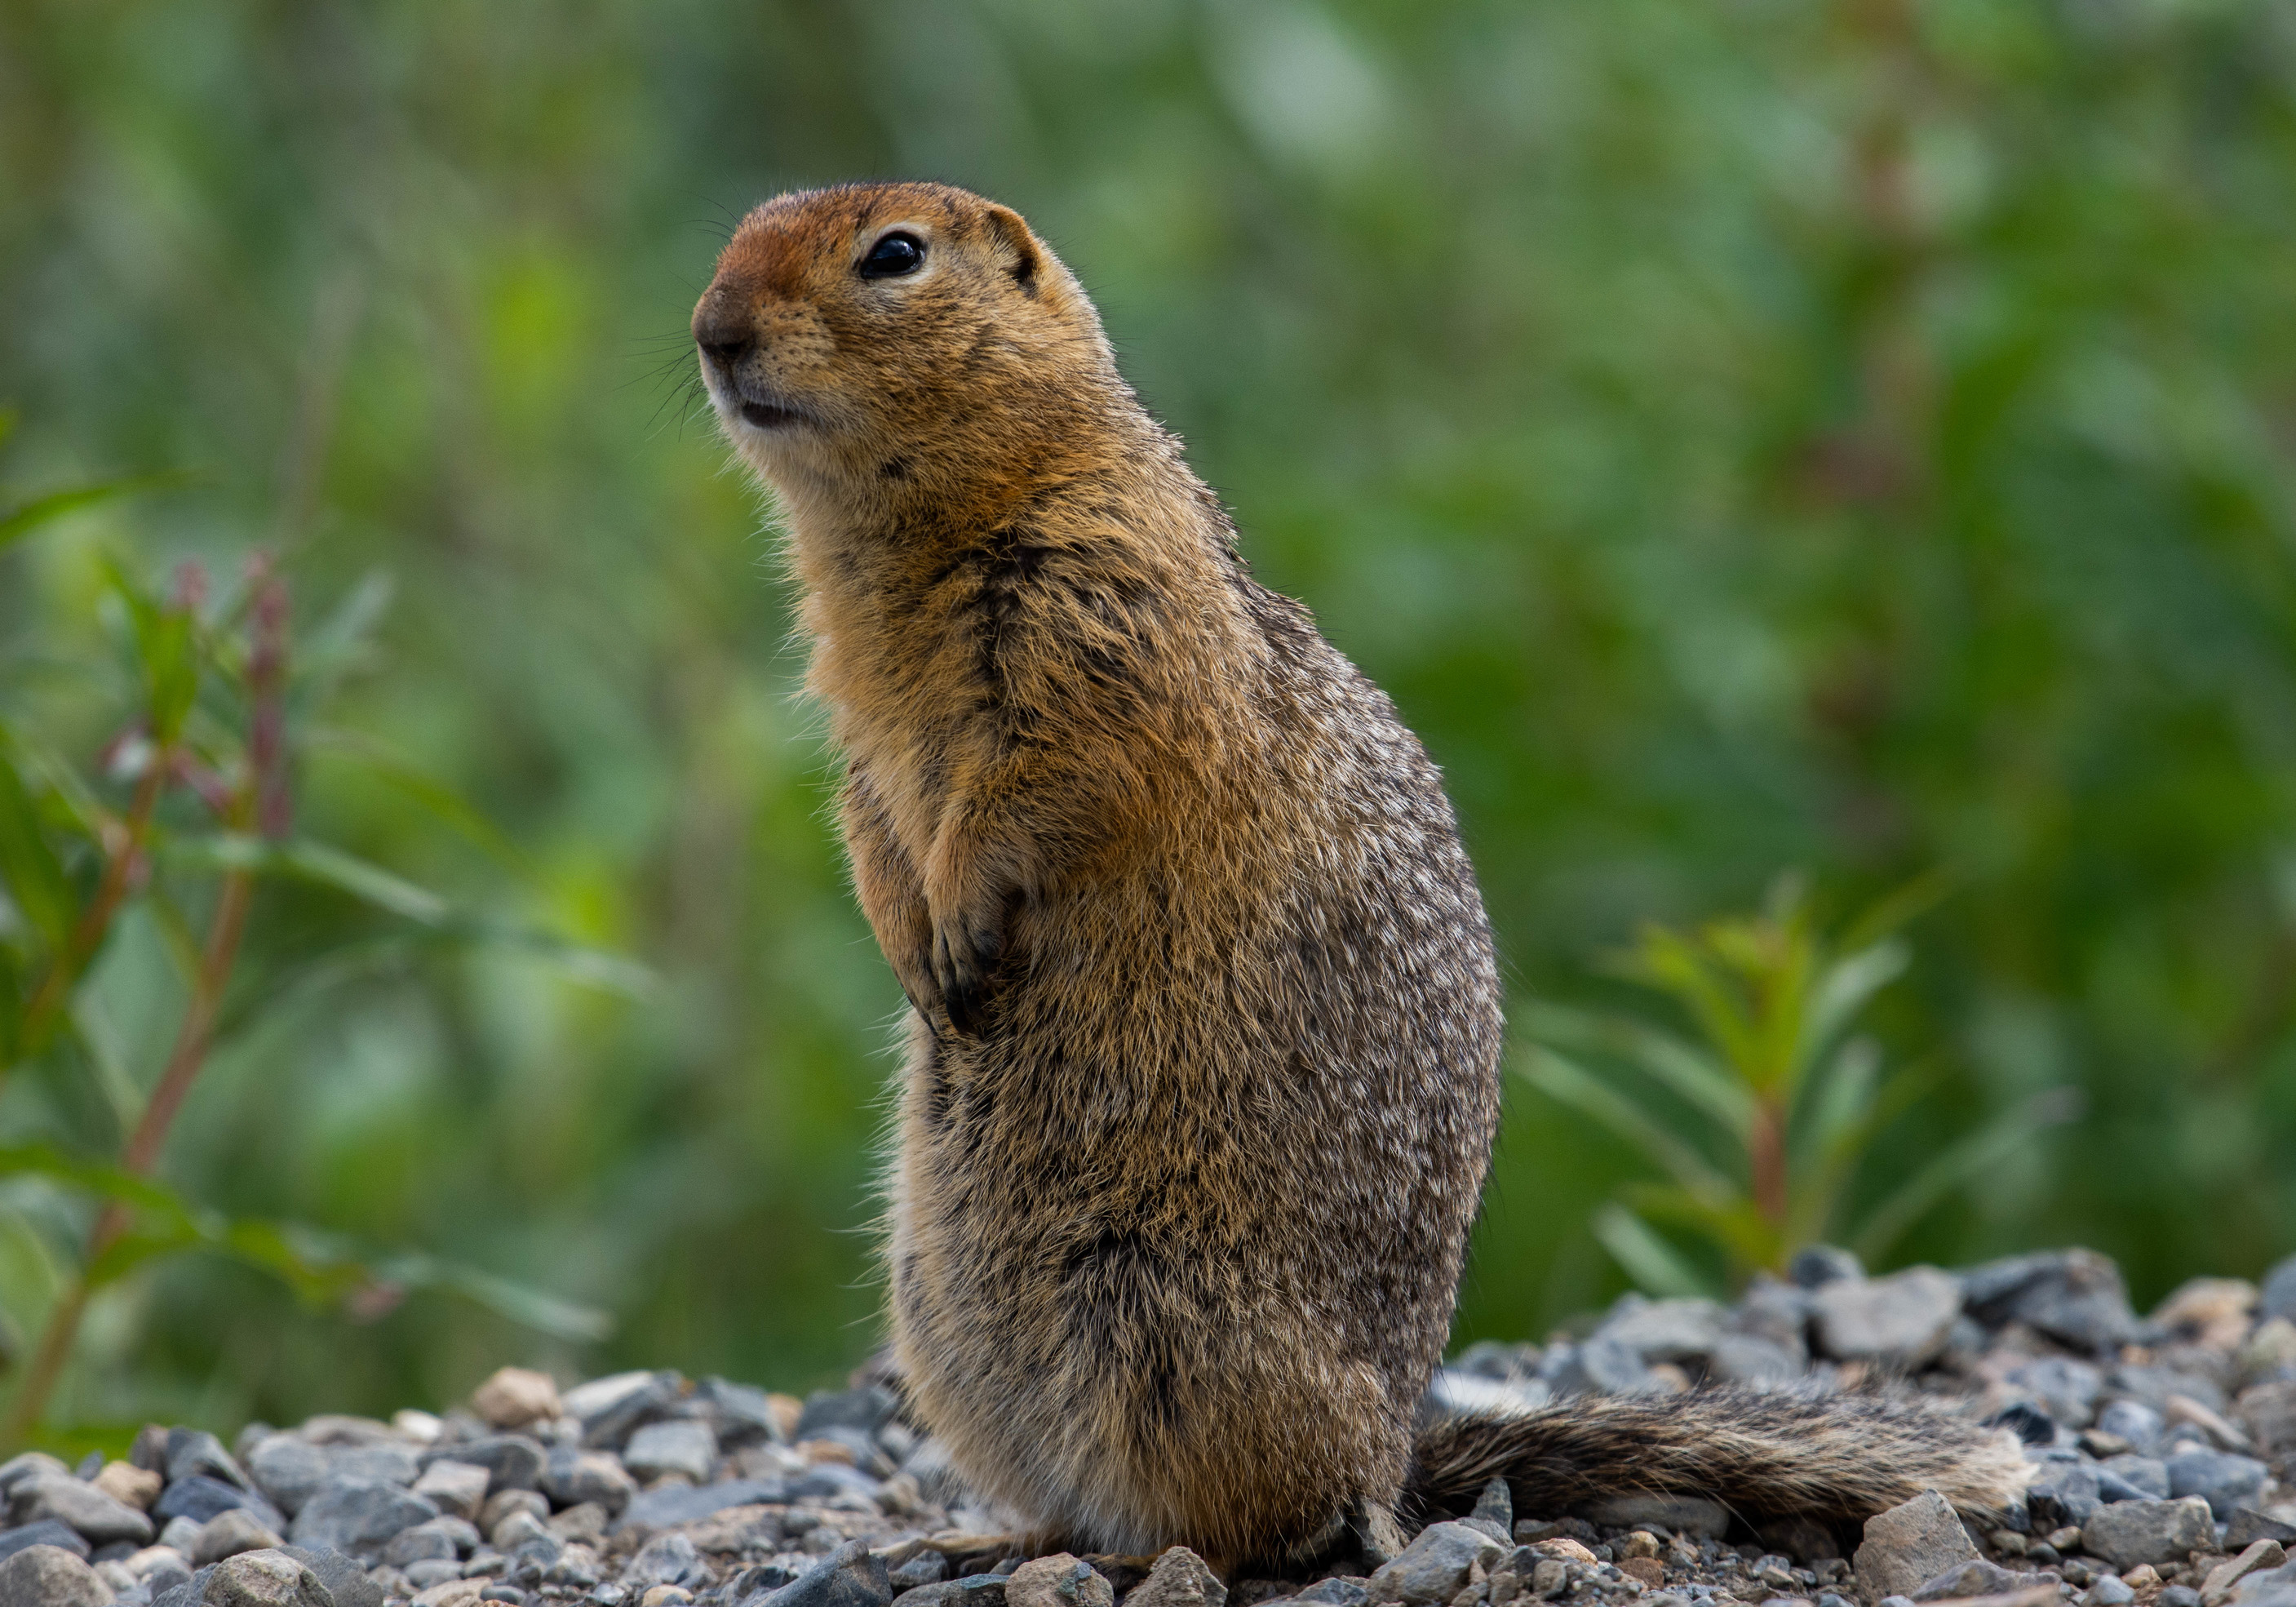 An Arctic ground squirrel